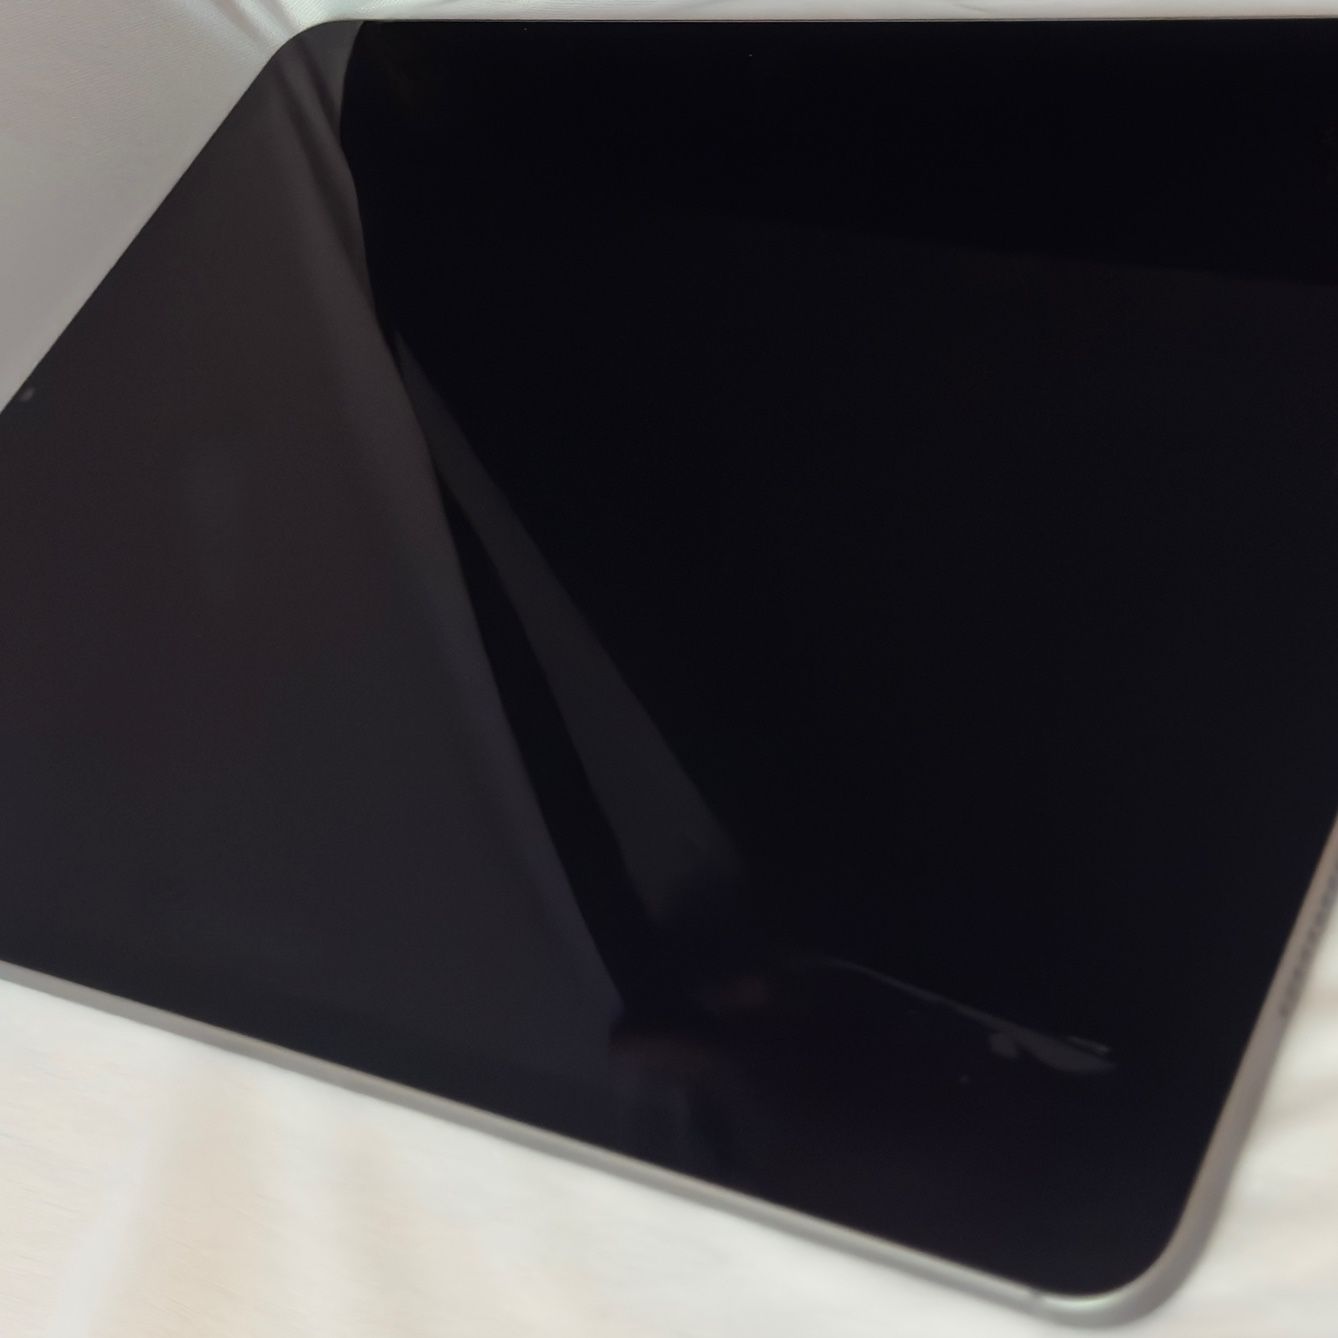 New iPad Pro 12.9" 6th Generation - 512GB Storage, Unlocked, with Cellular